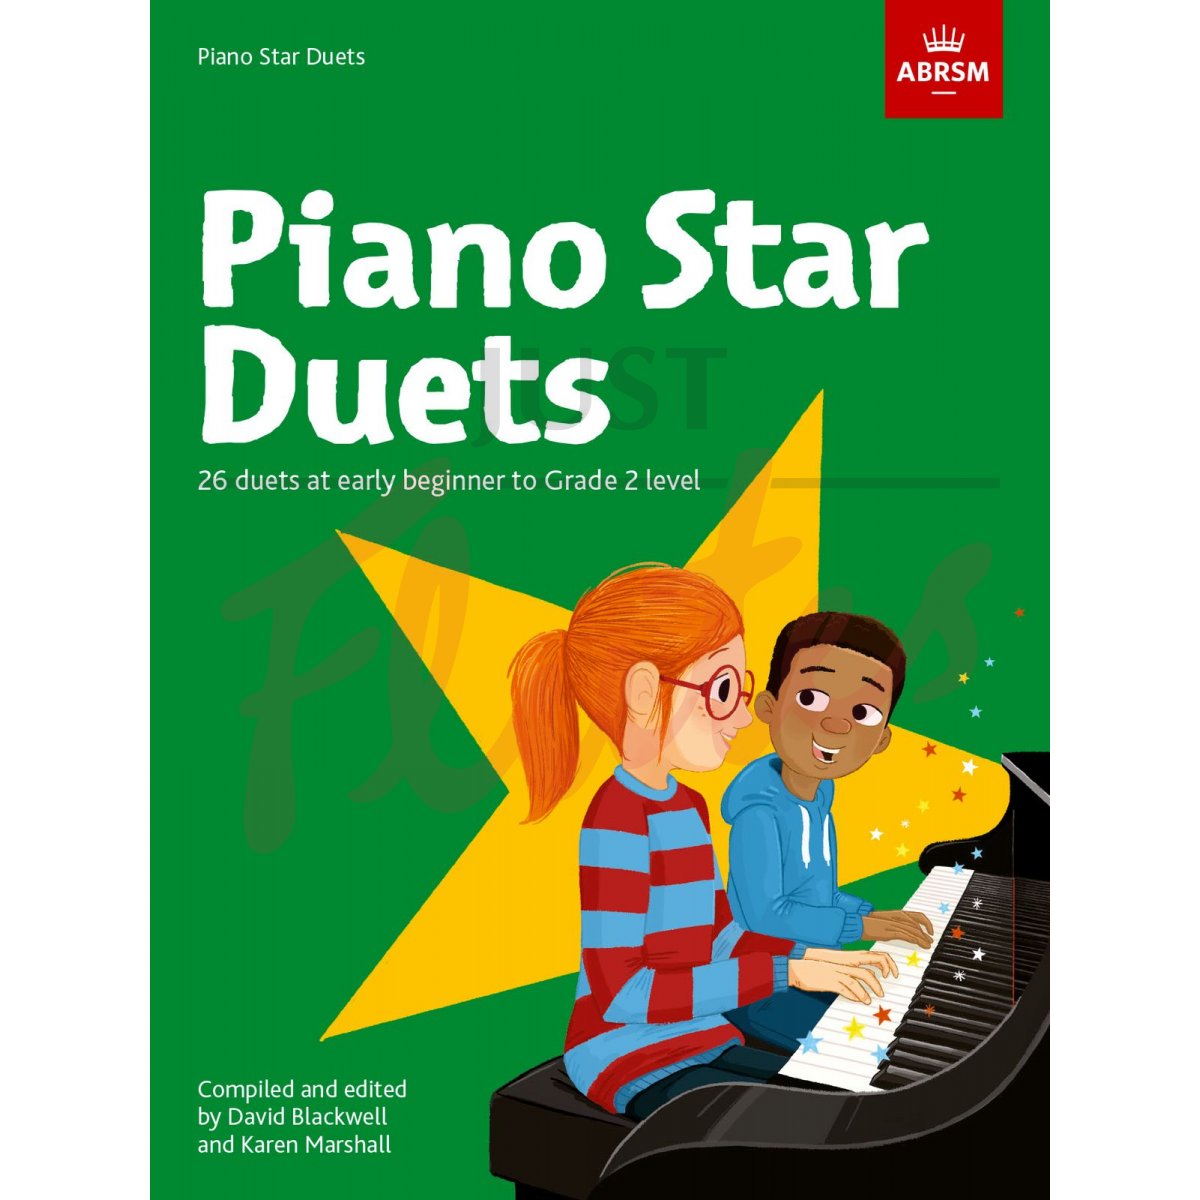 Piano Star Duets